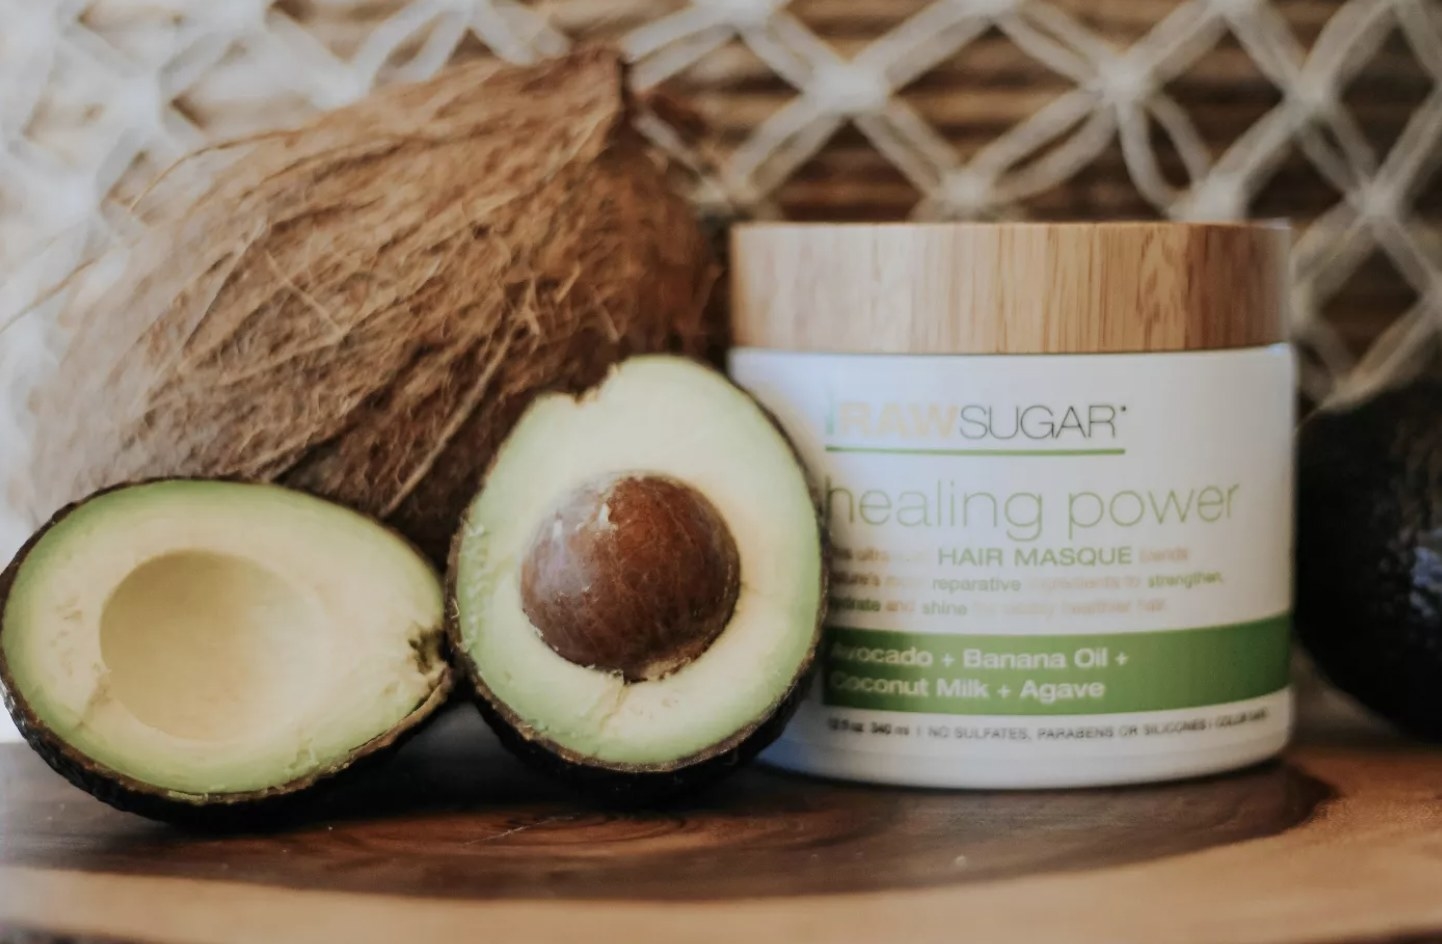 The jar of healing hair masque next to a sliced avocado